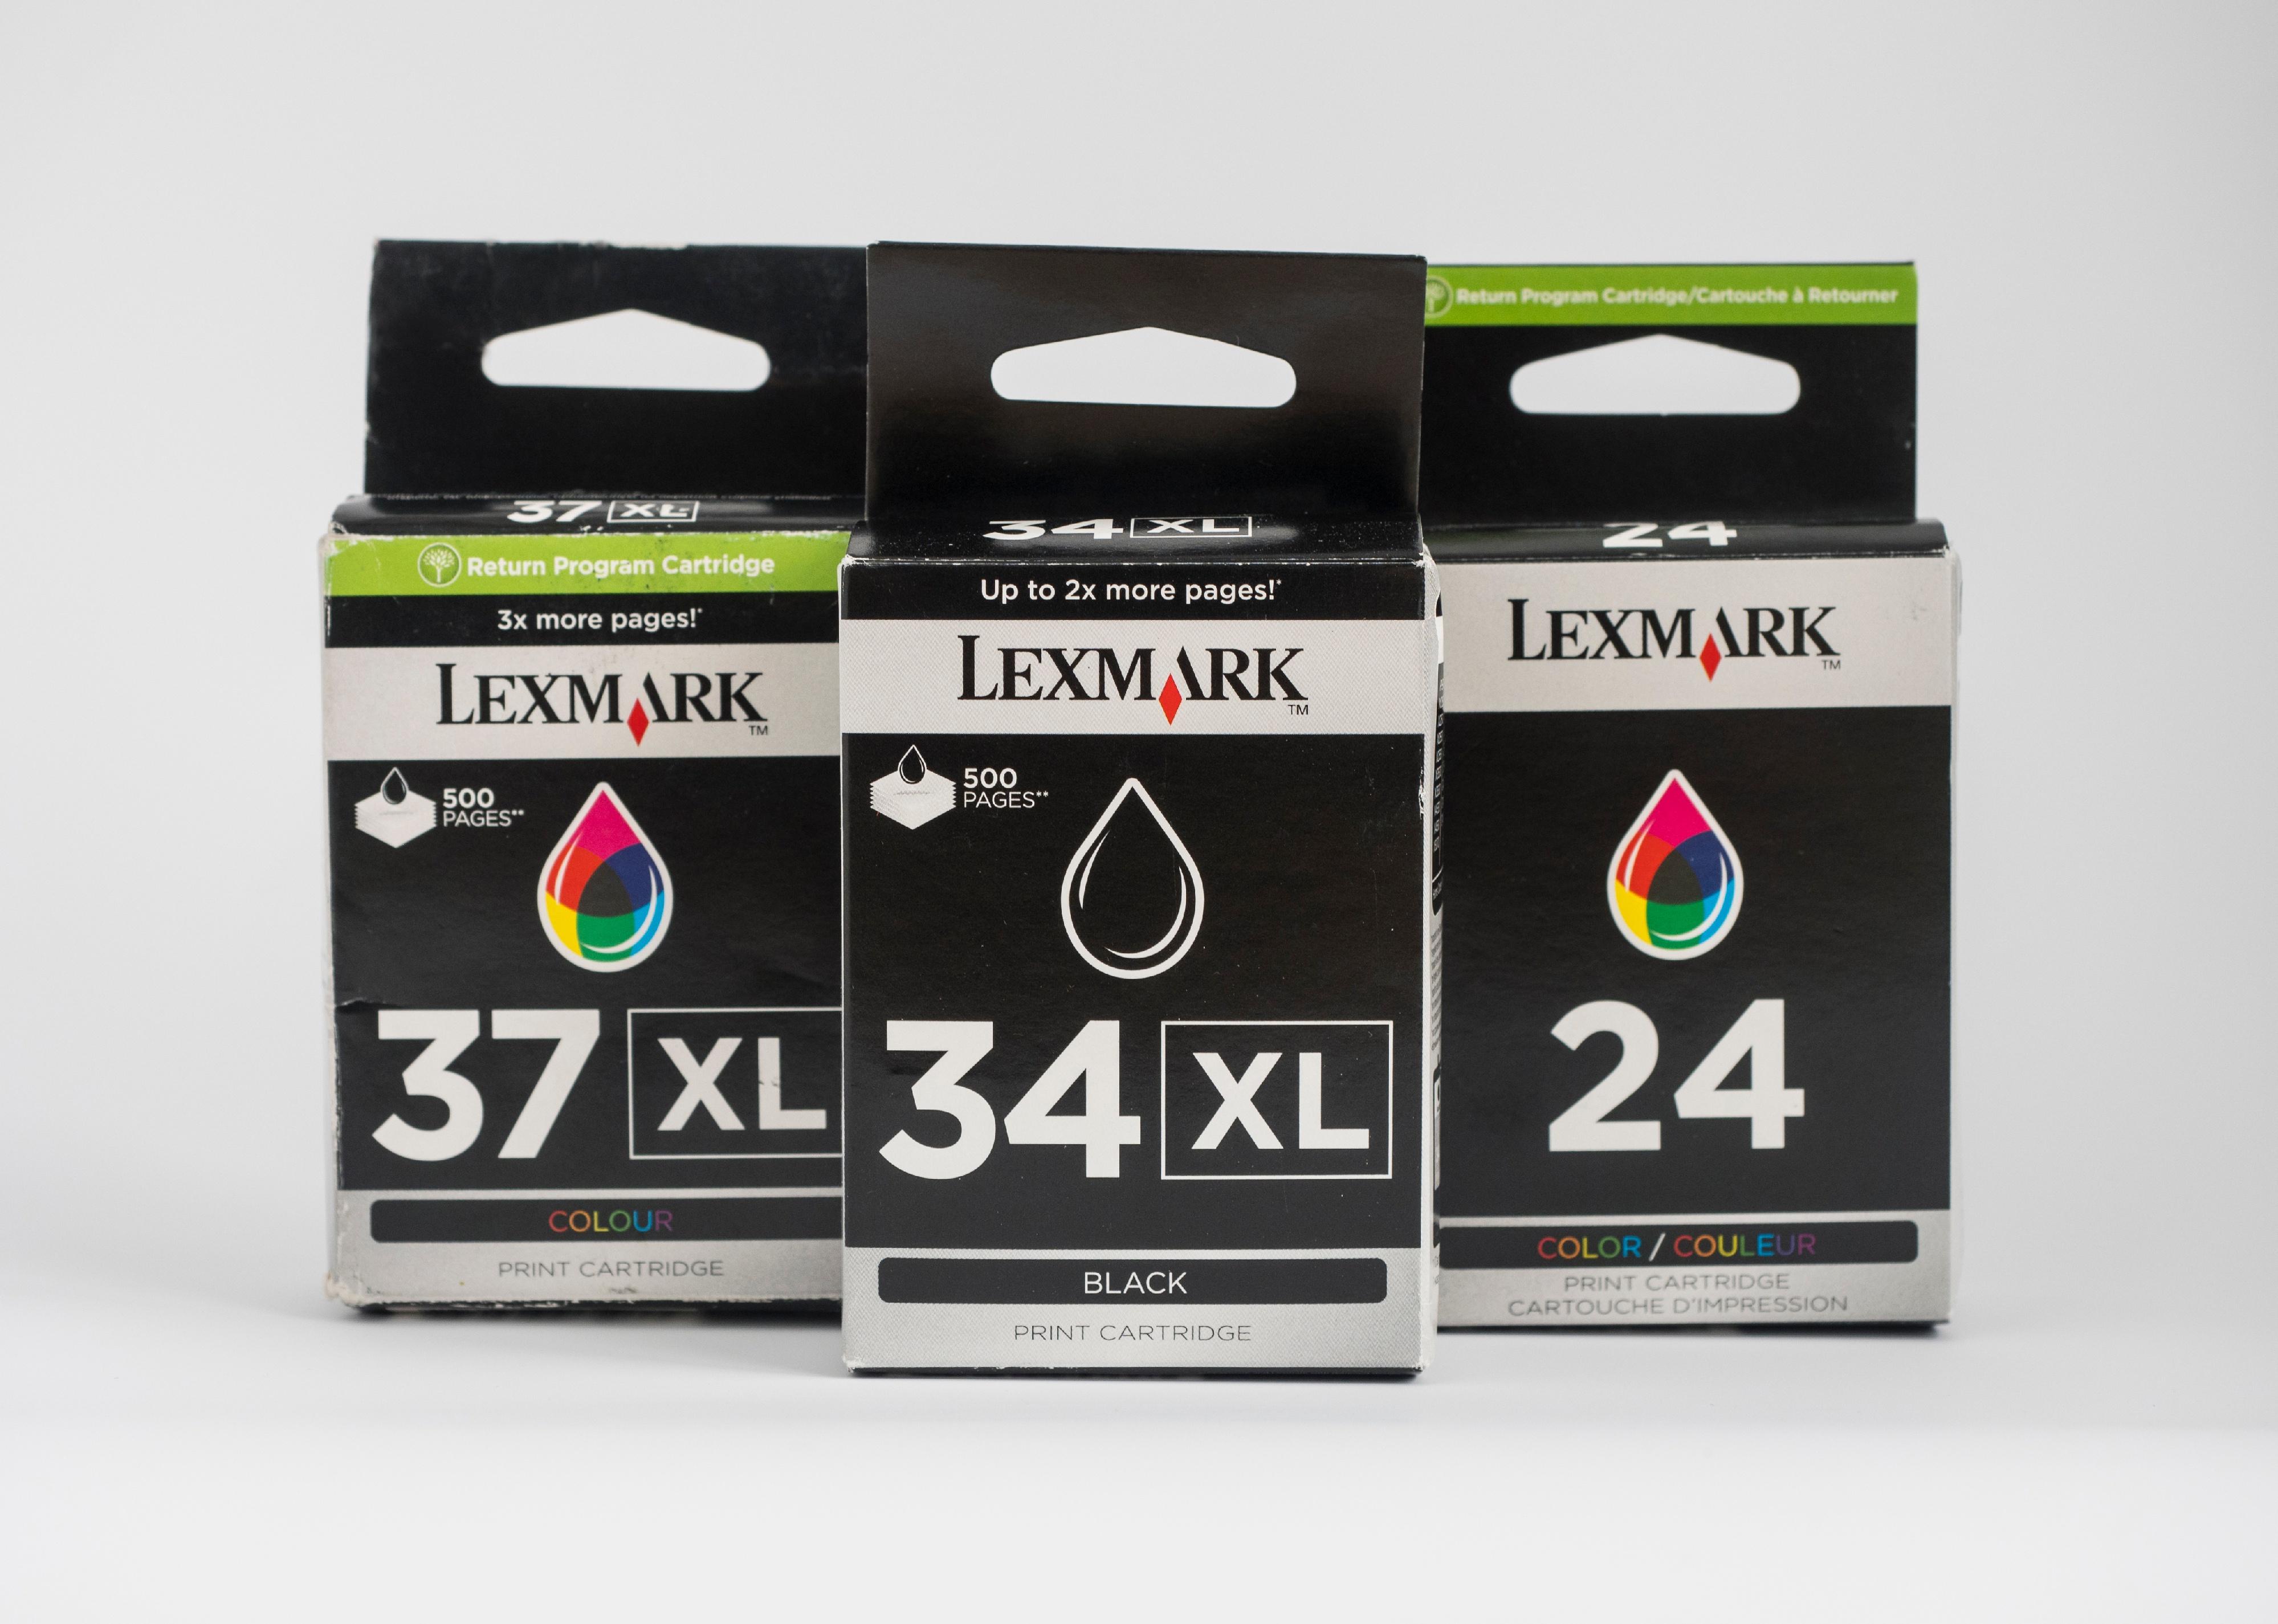 Lexmark ink cartridges in a box.